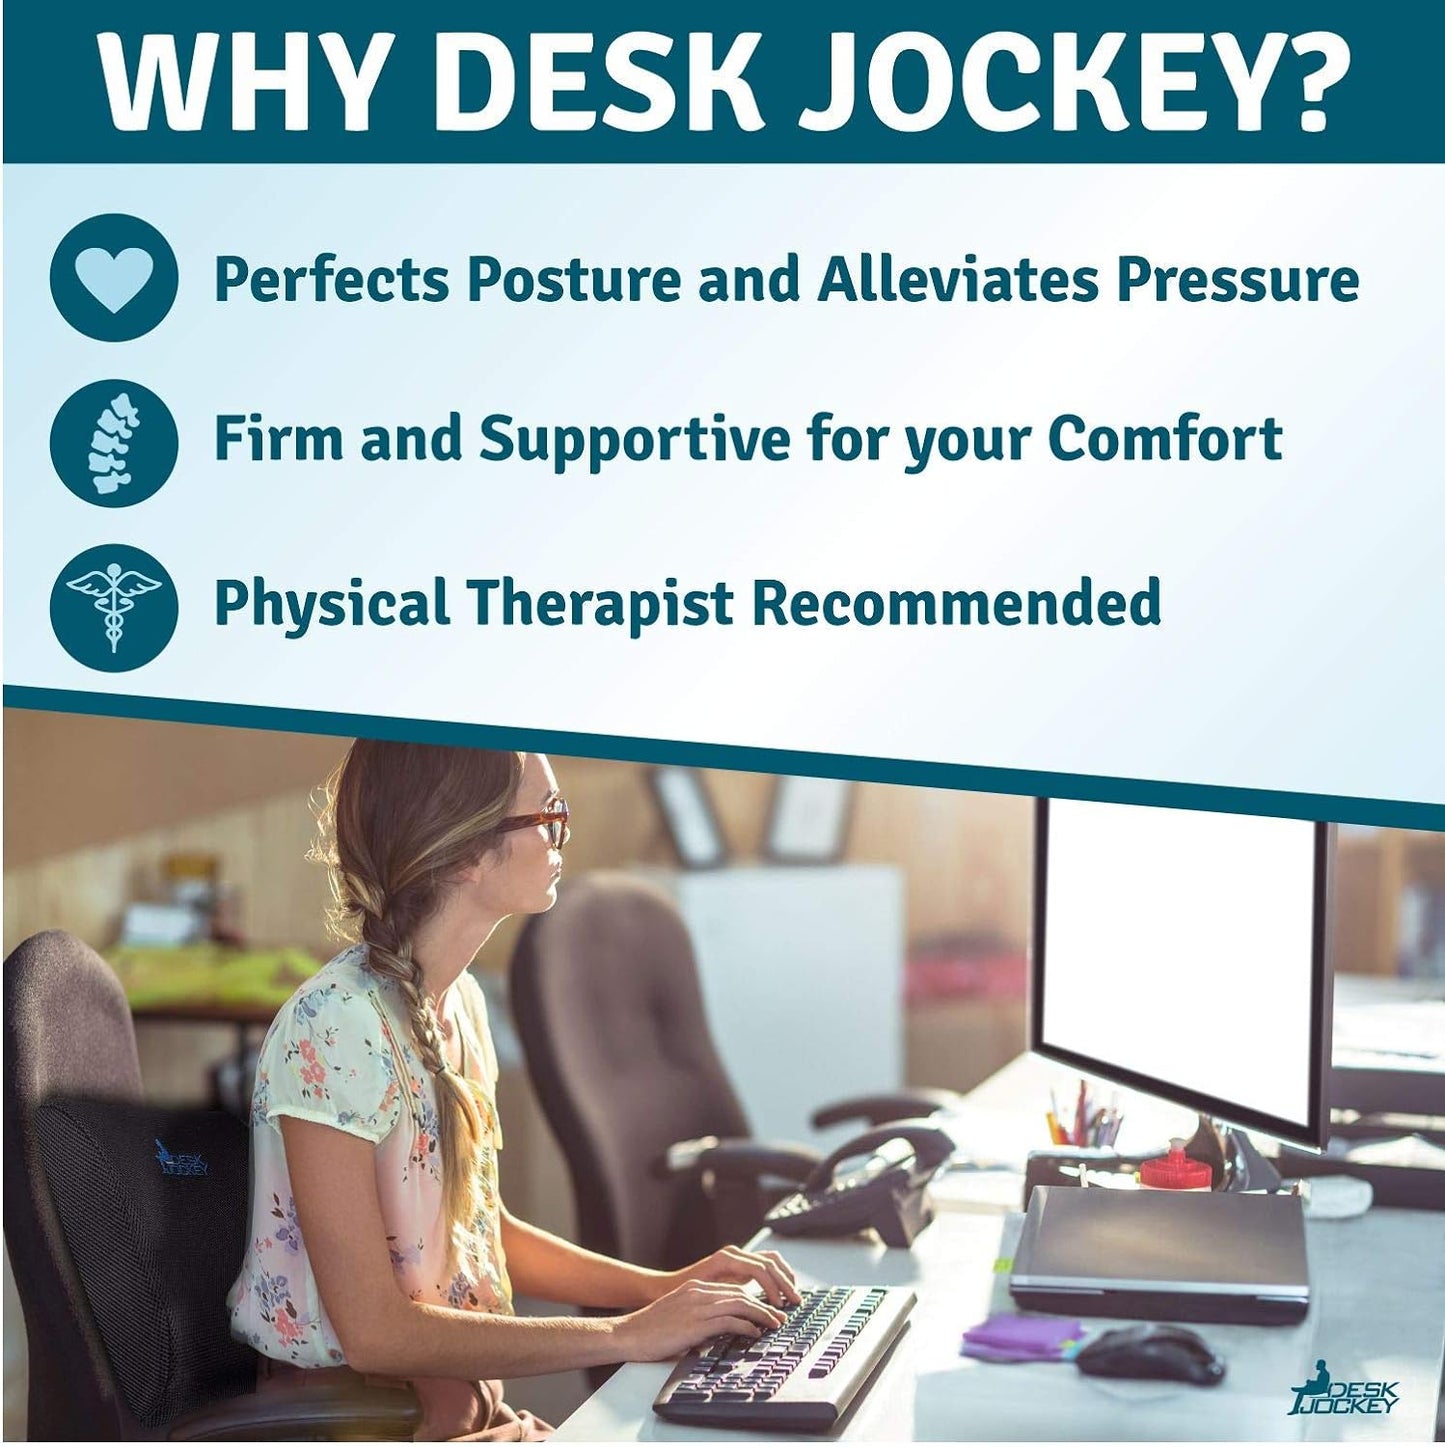 Lumbar Support for Office chair Cushion - Desk Jockey – Desk Jockey LLC